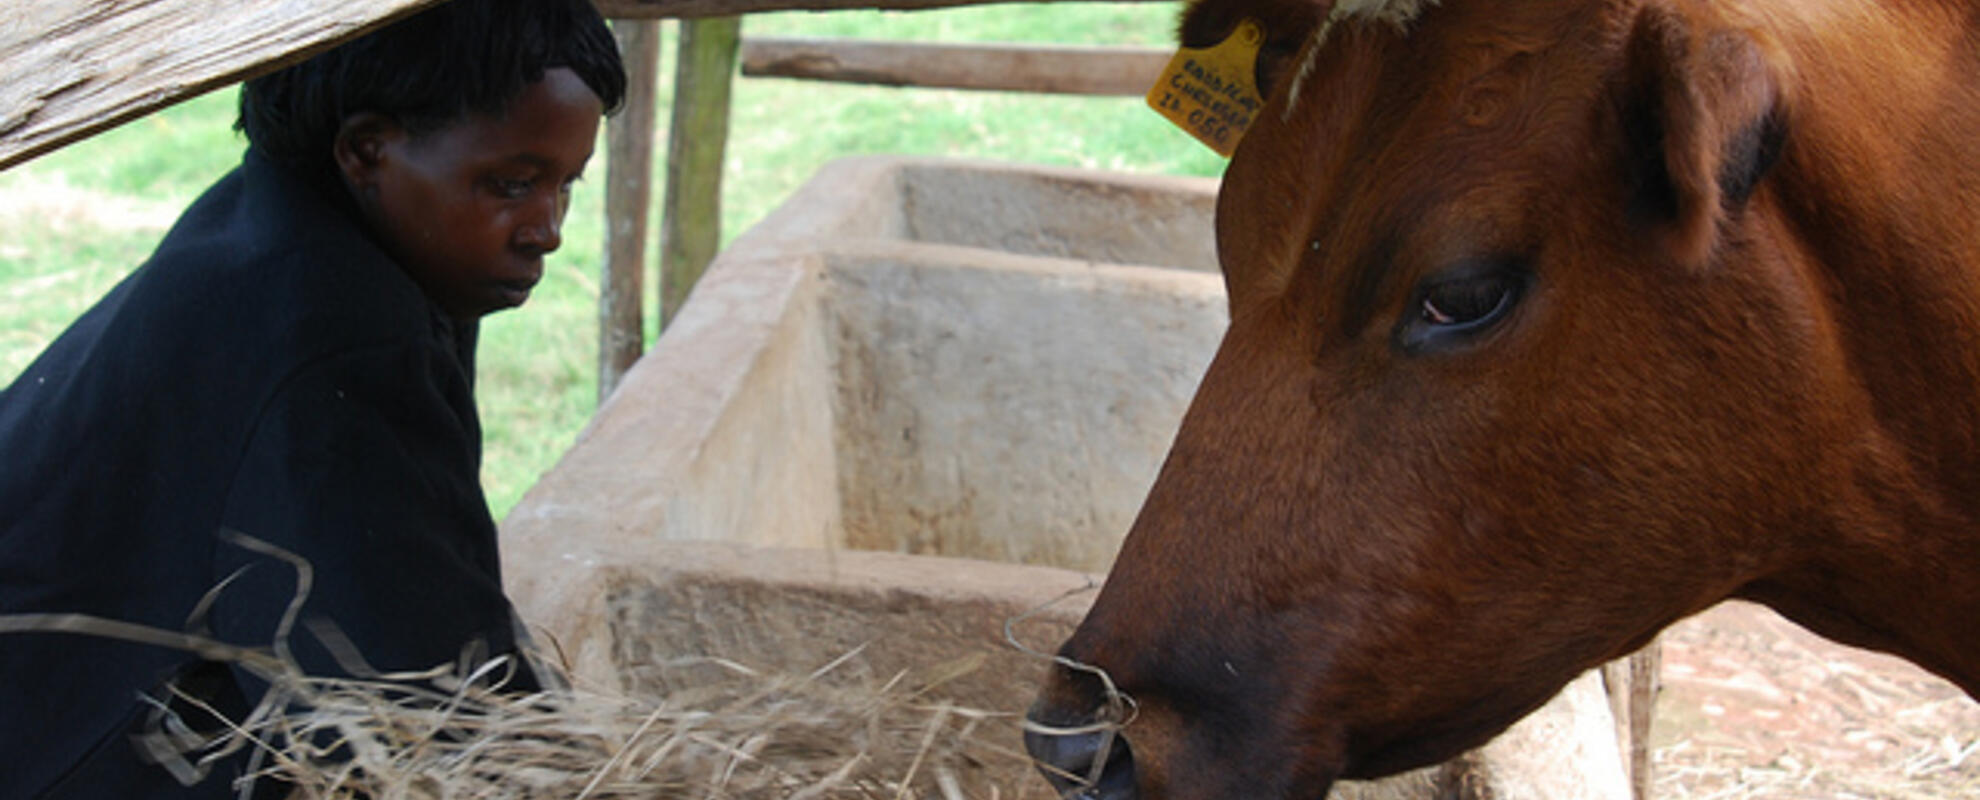 East Africa Dairy Development (EADD) project